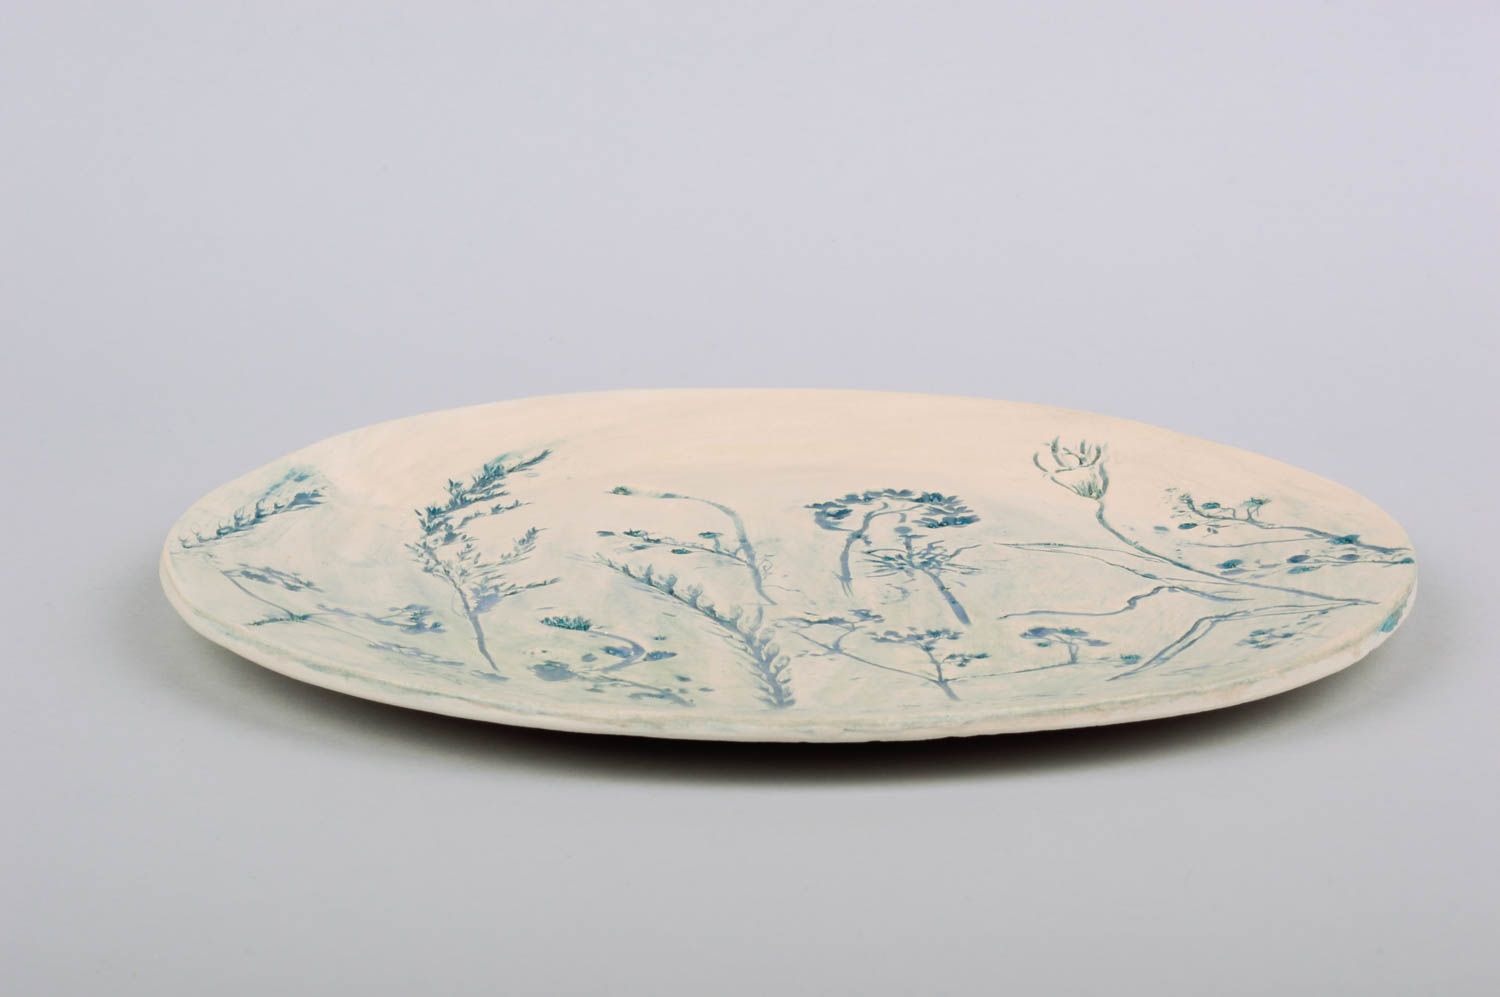 Beautiful round handmade ceramic plate clay plate decorative dishware gift ideas photo 3